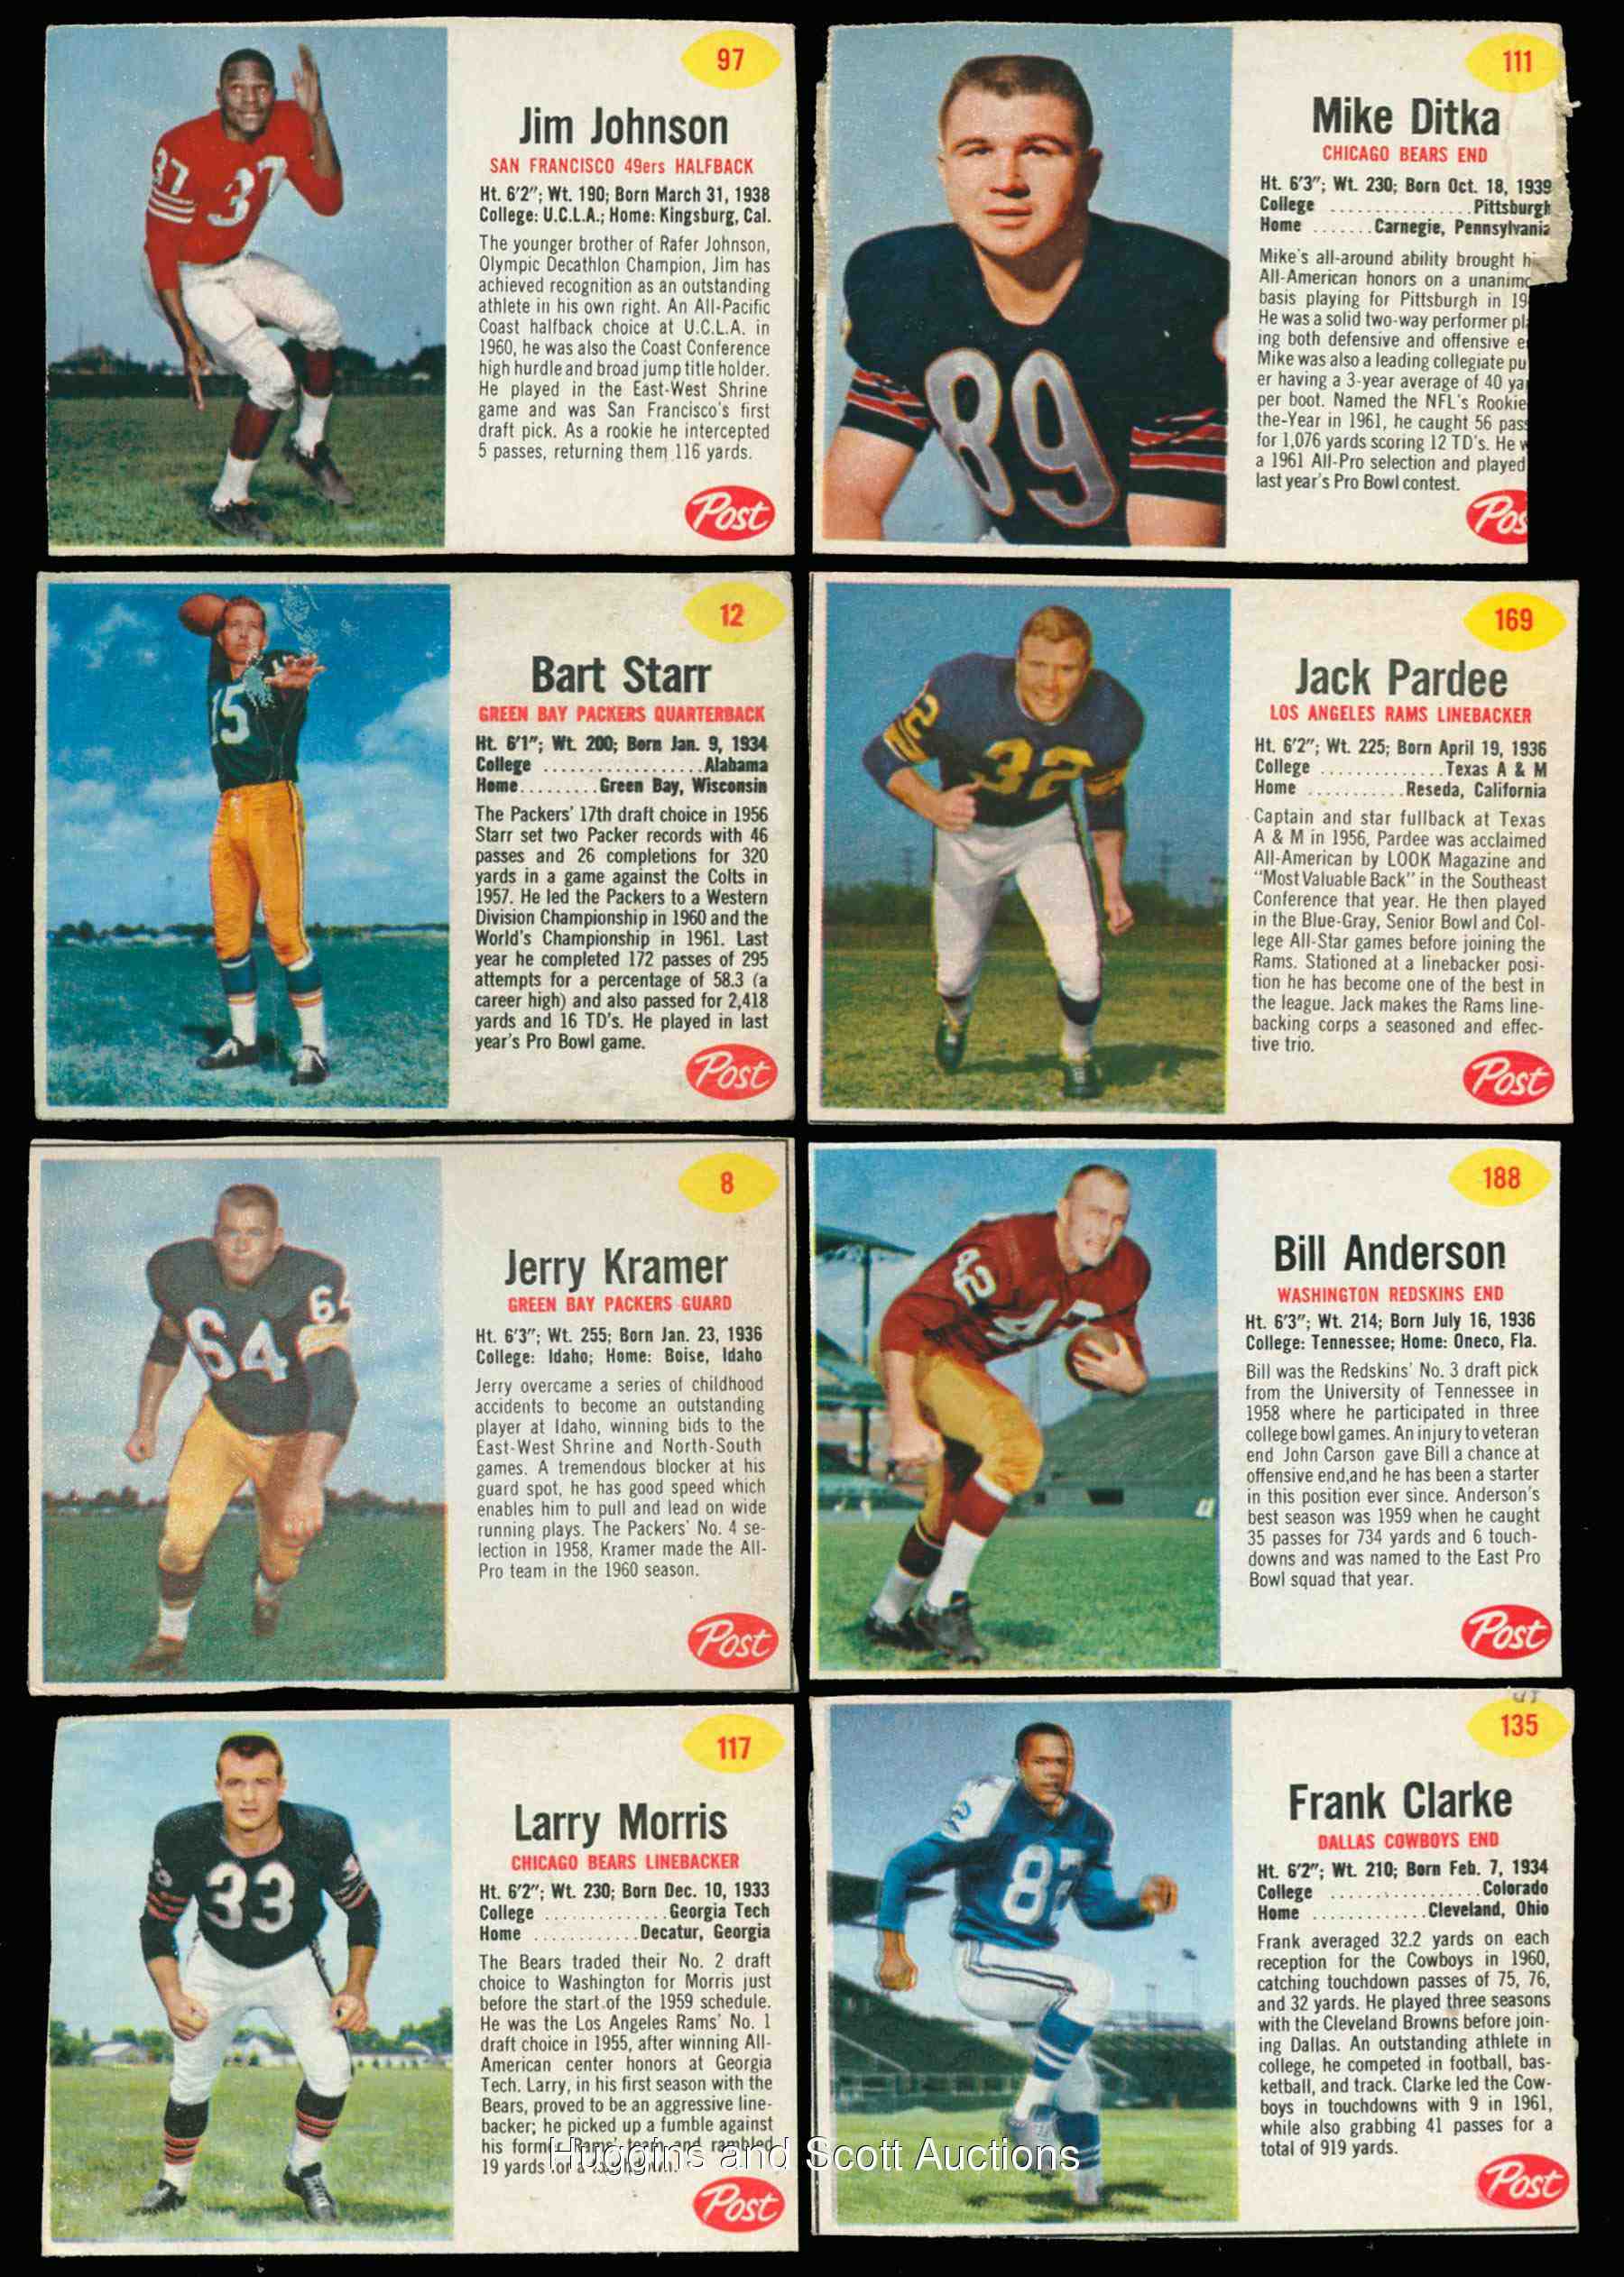 1962 Post Cereal FB #188 Bill Anderson SHORT PRINT (Redskins) Football cards value